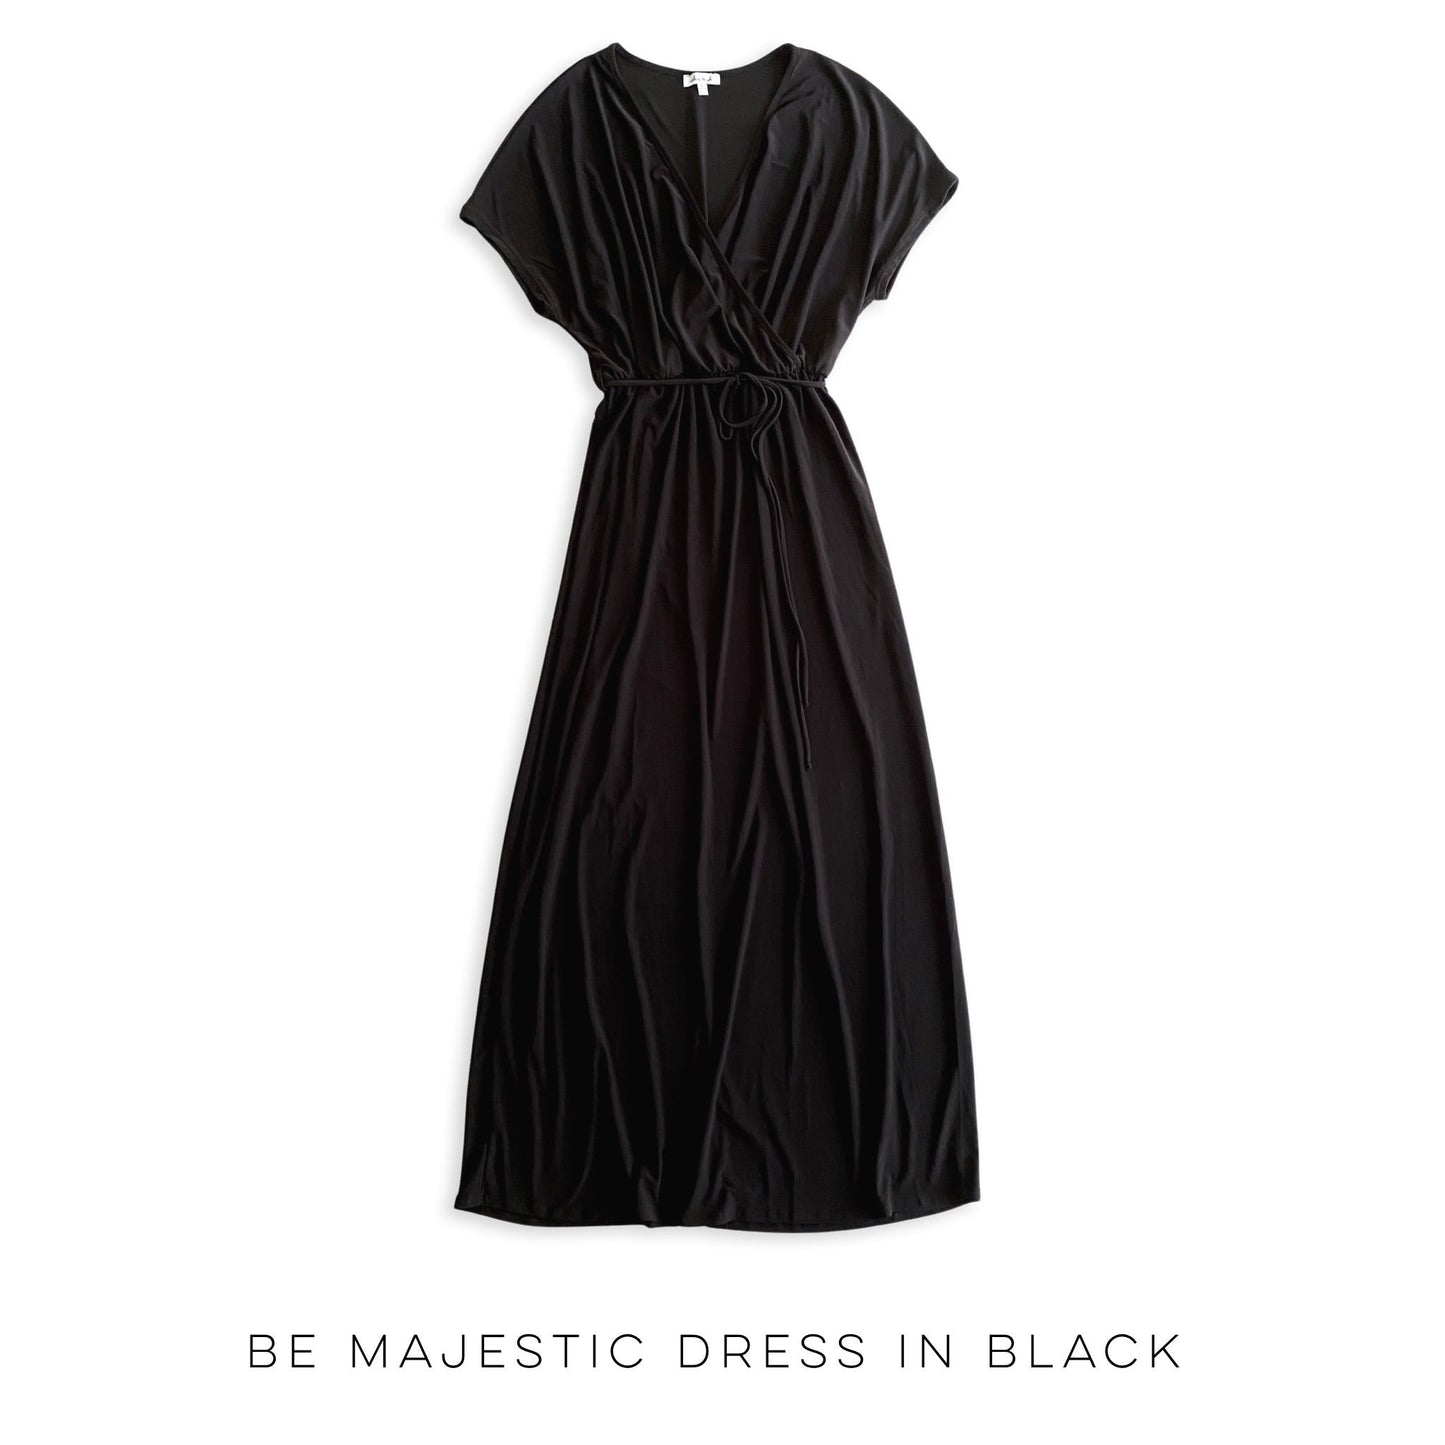 Be Majestic Dress in Black